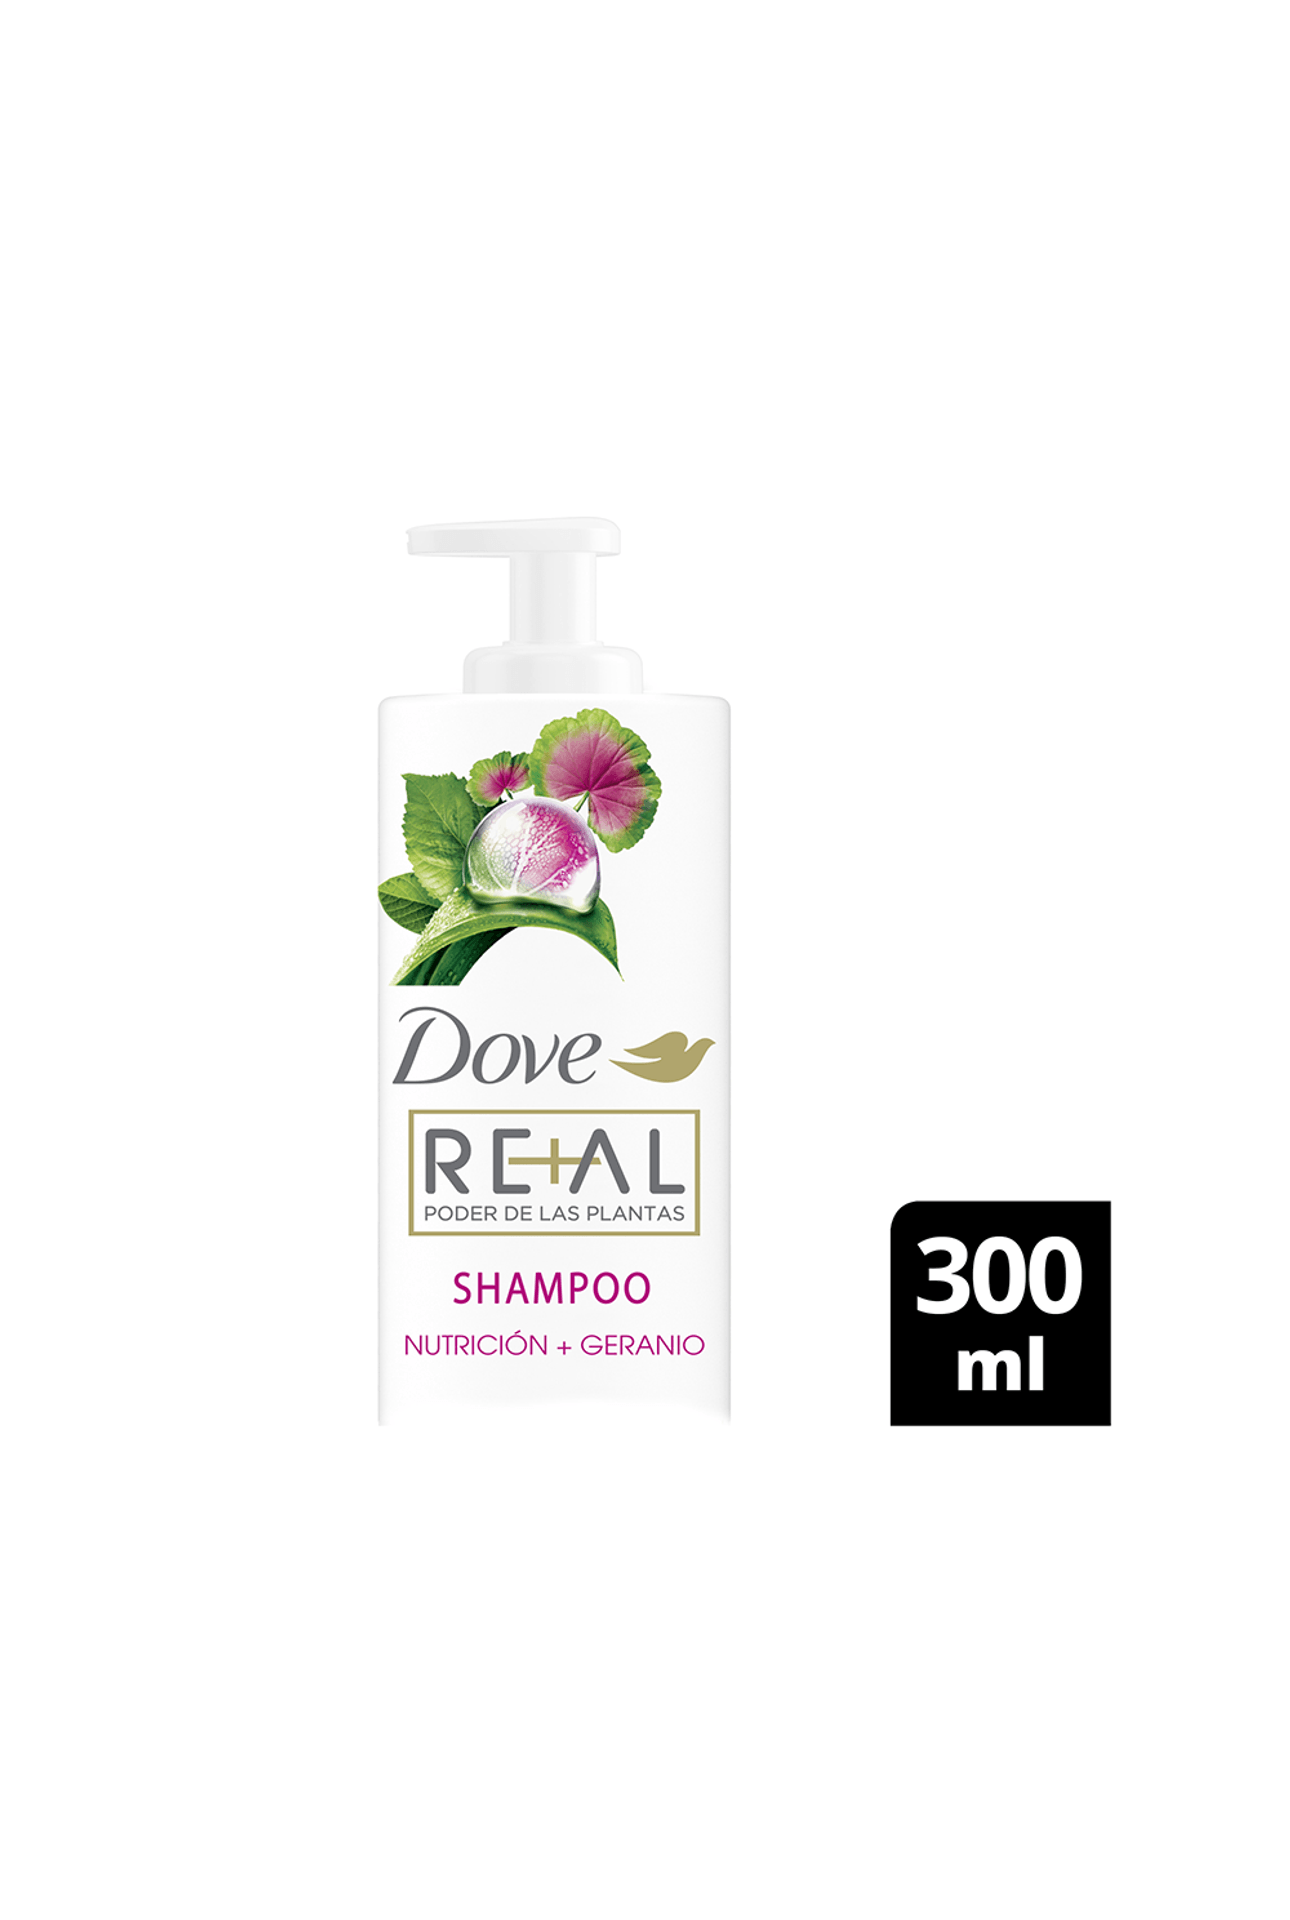 Dove-Shampoo-Dove-Poder-de-las-Plantas-Nutricion-Geranio-x-300-ml-7891150081048_img1